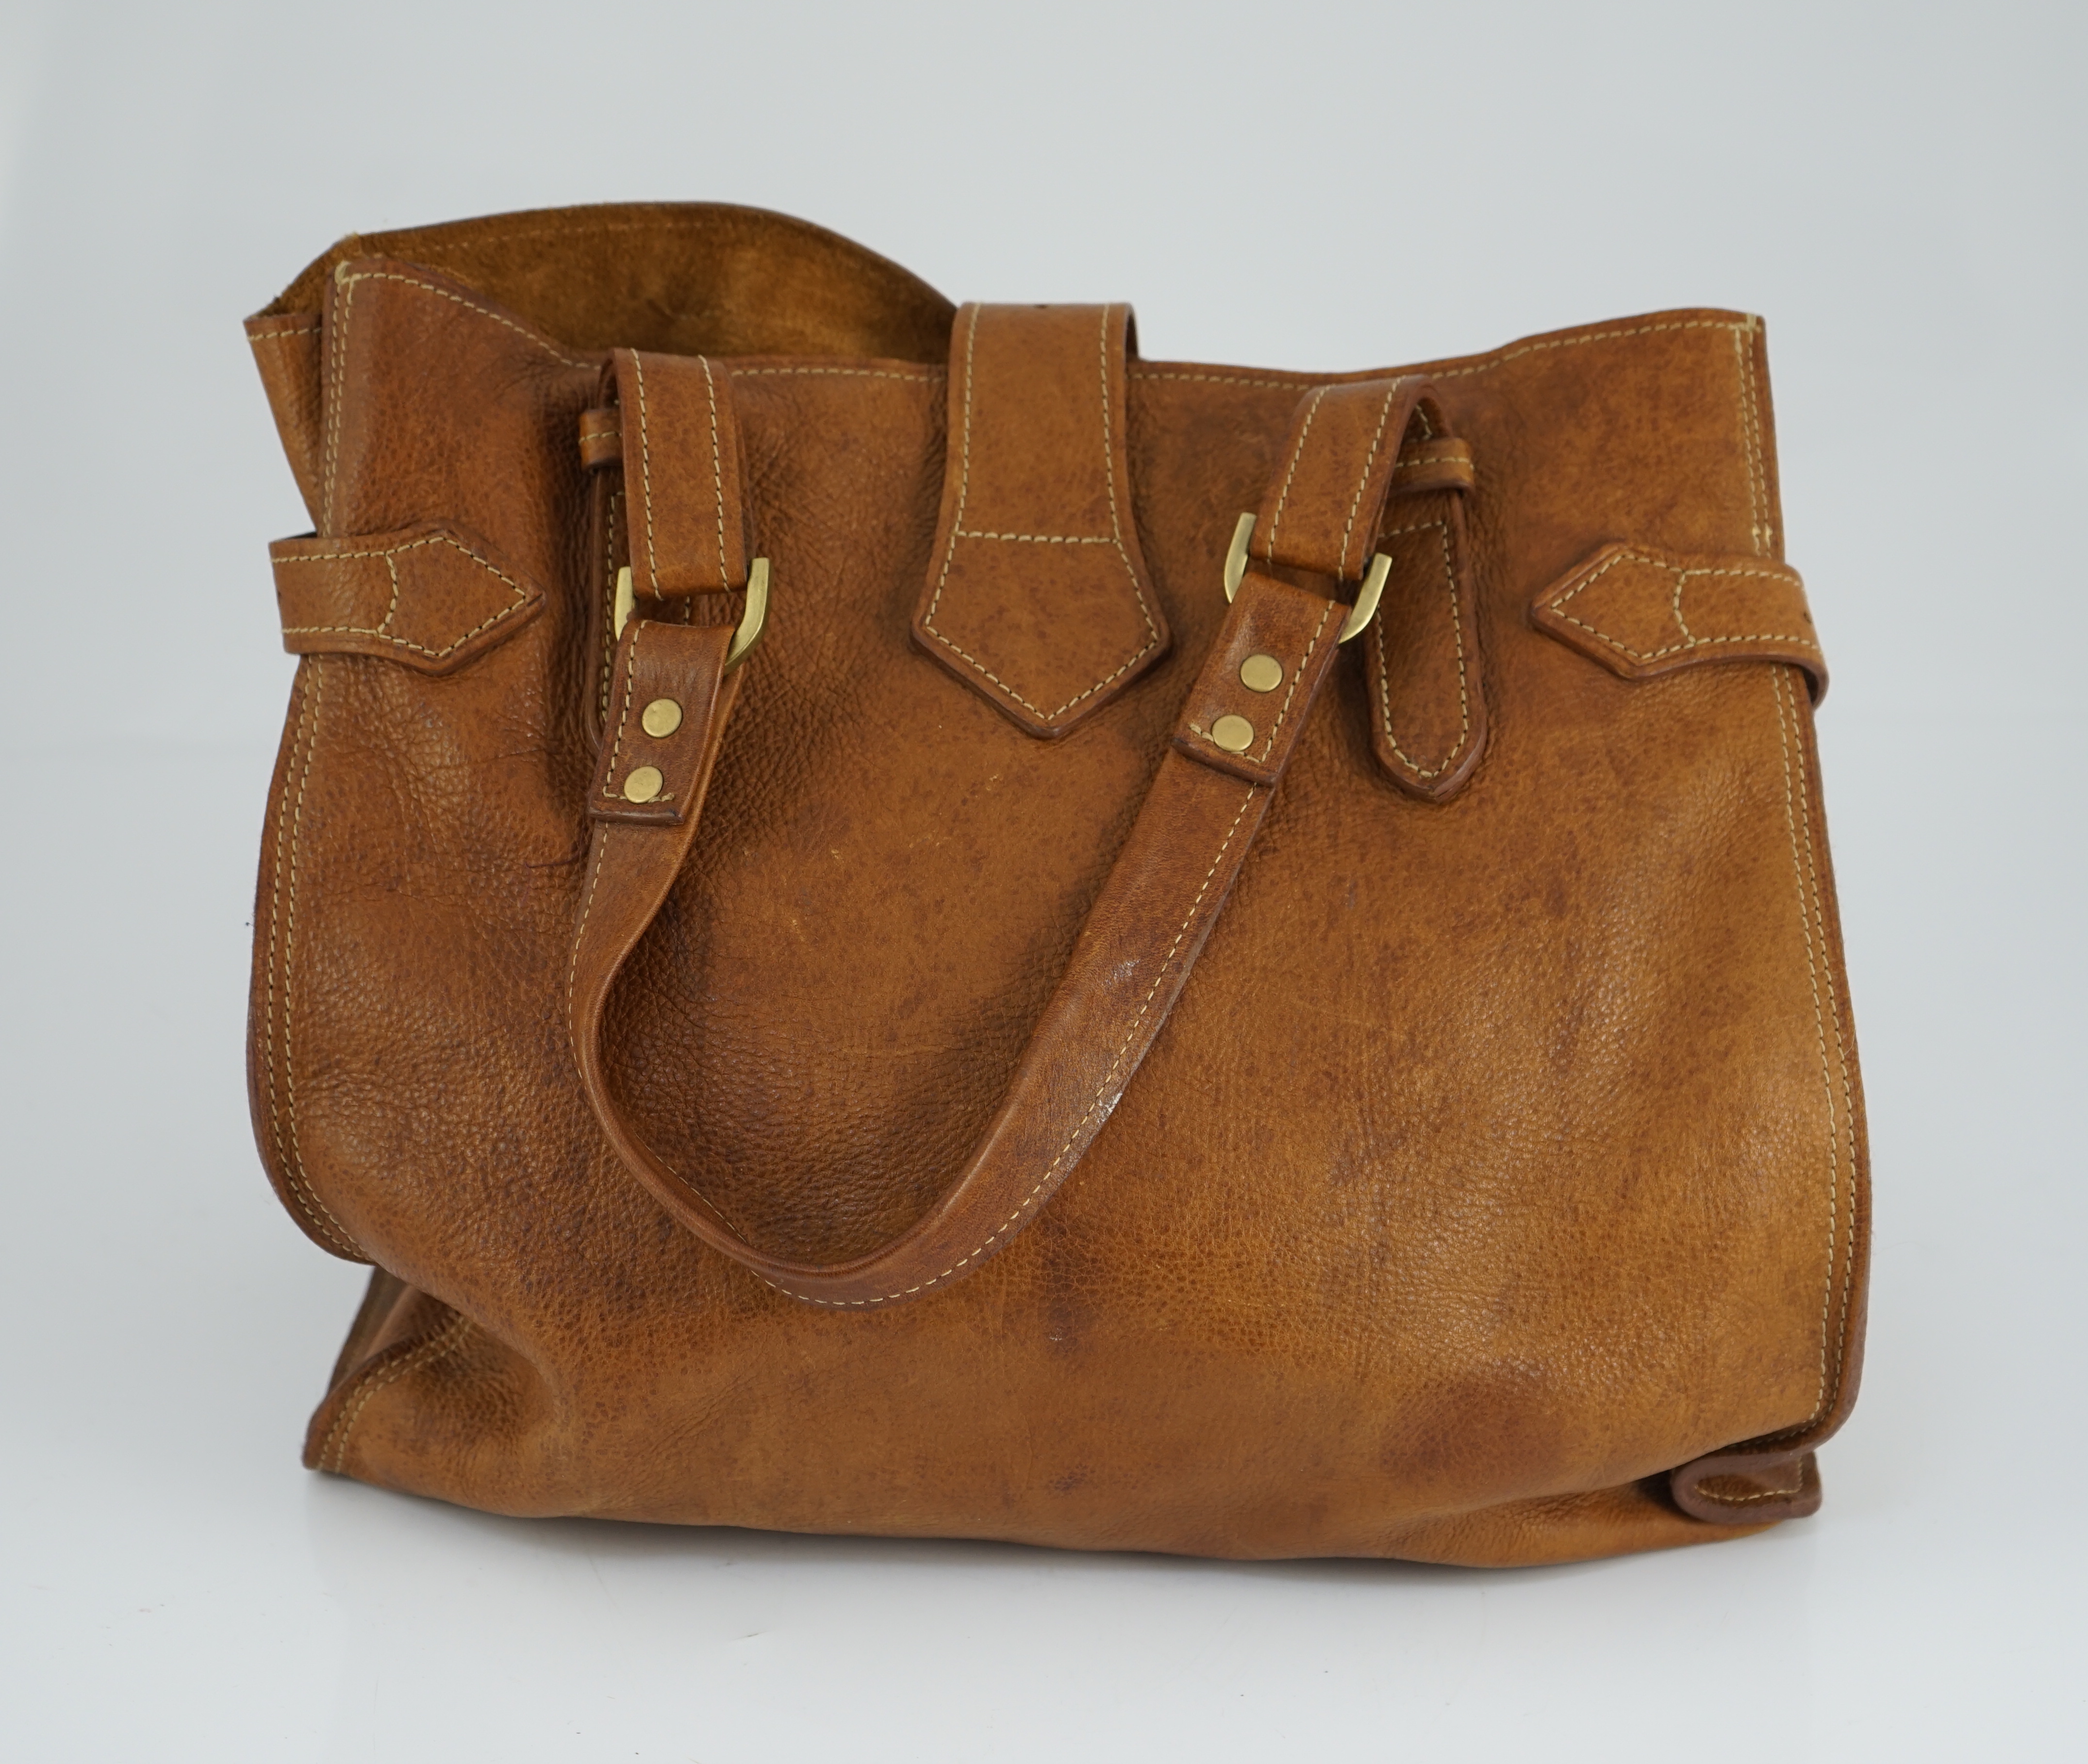 A Mulberry Elgin tote oak Darwin leather handbag, width 34cm, depth 15cm, height 33cm